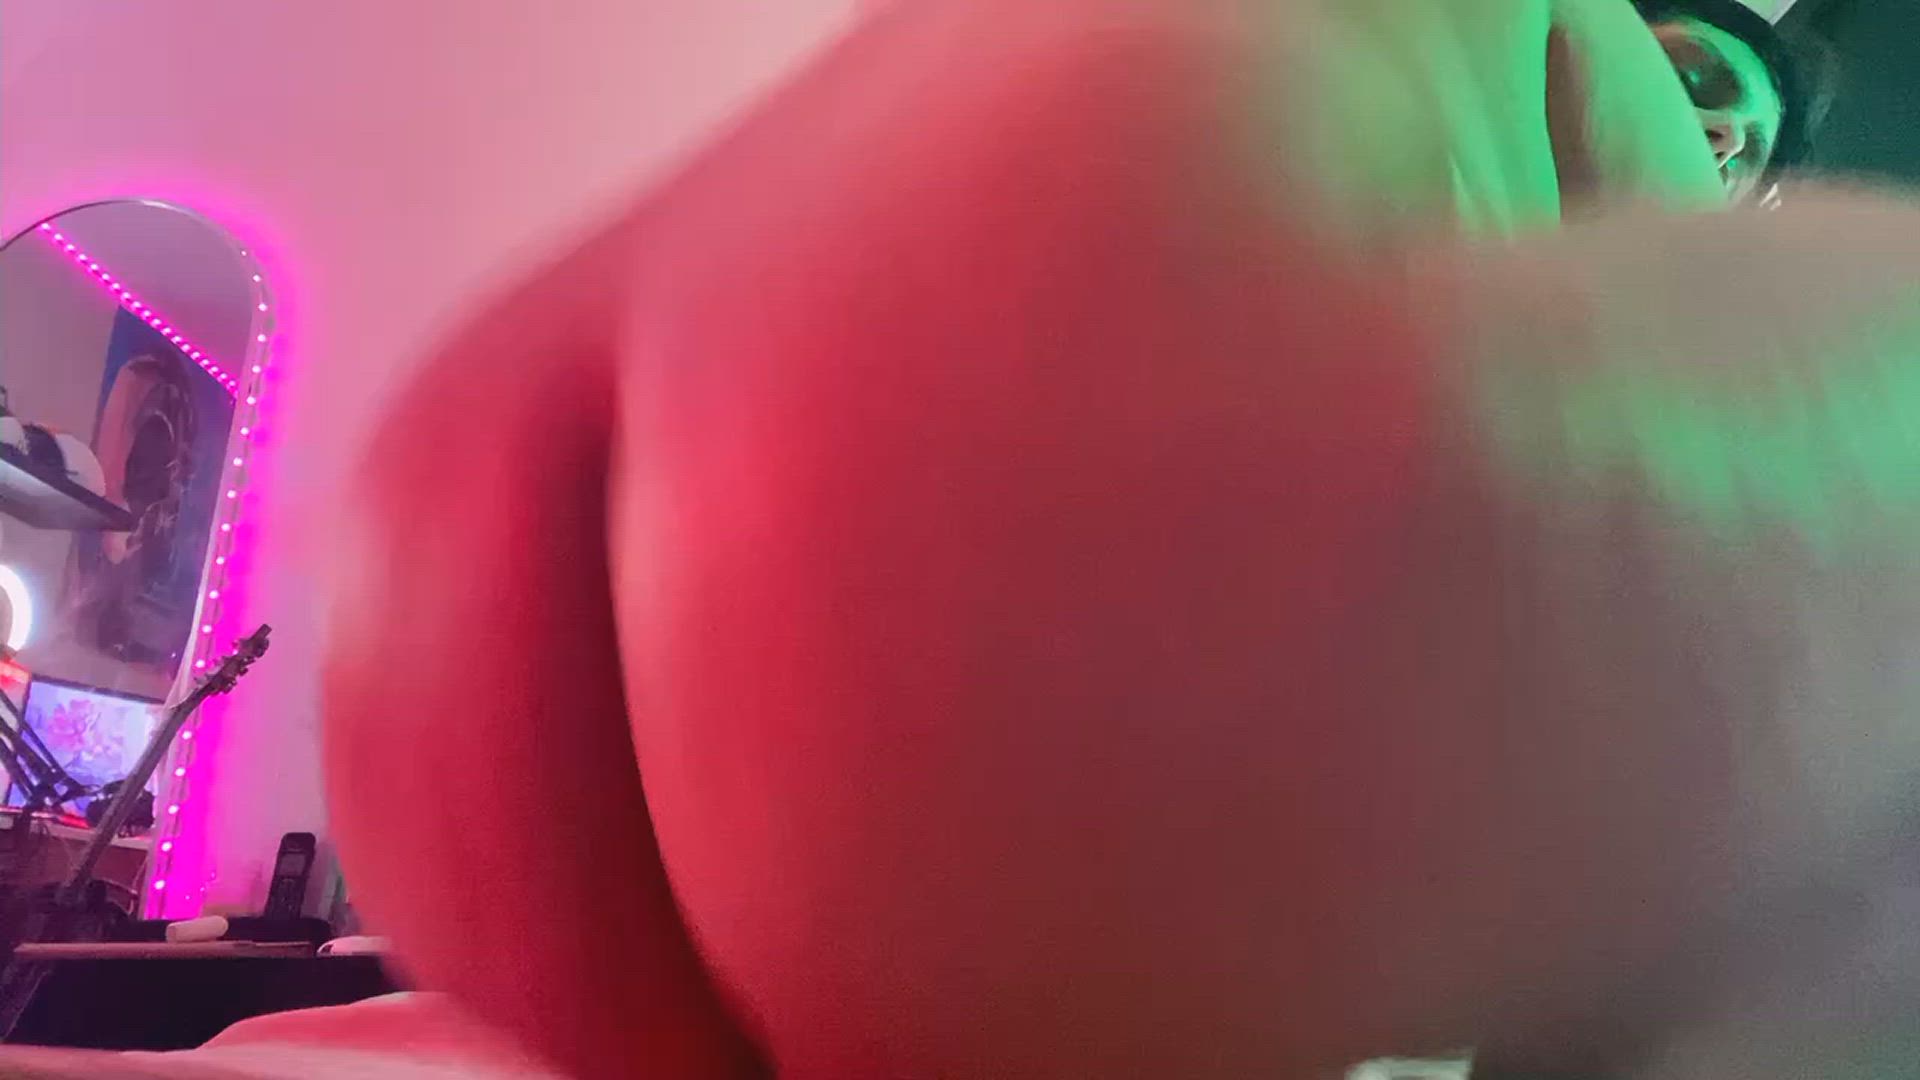 Ass porn video with onlyfans model bunnygir_emma <strong>@bunnygirl_emma</strong>